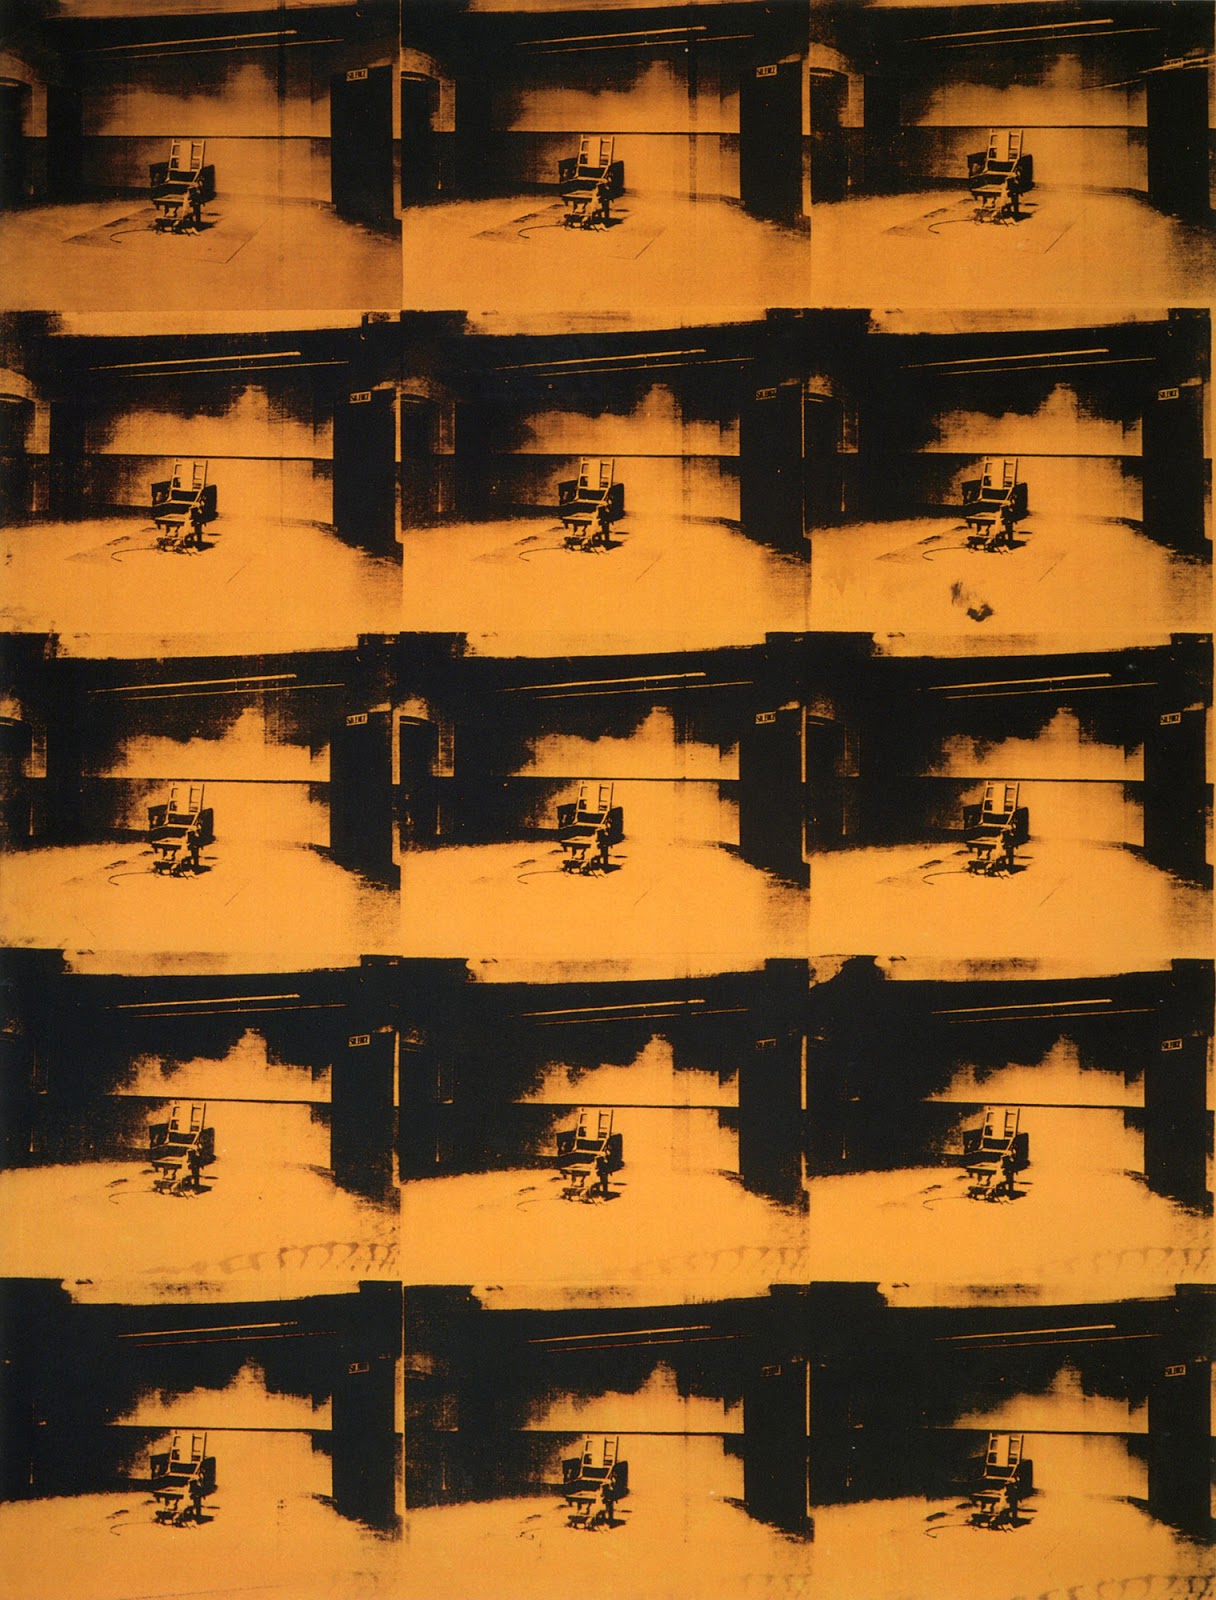 Andy+Warhol-1928-1987 (131).jpg